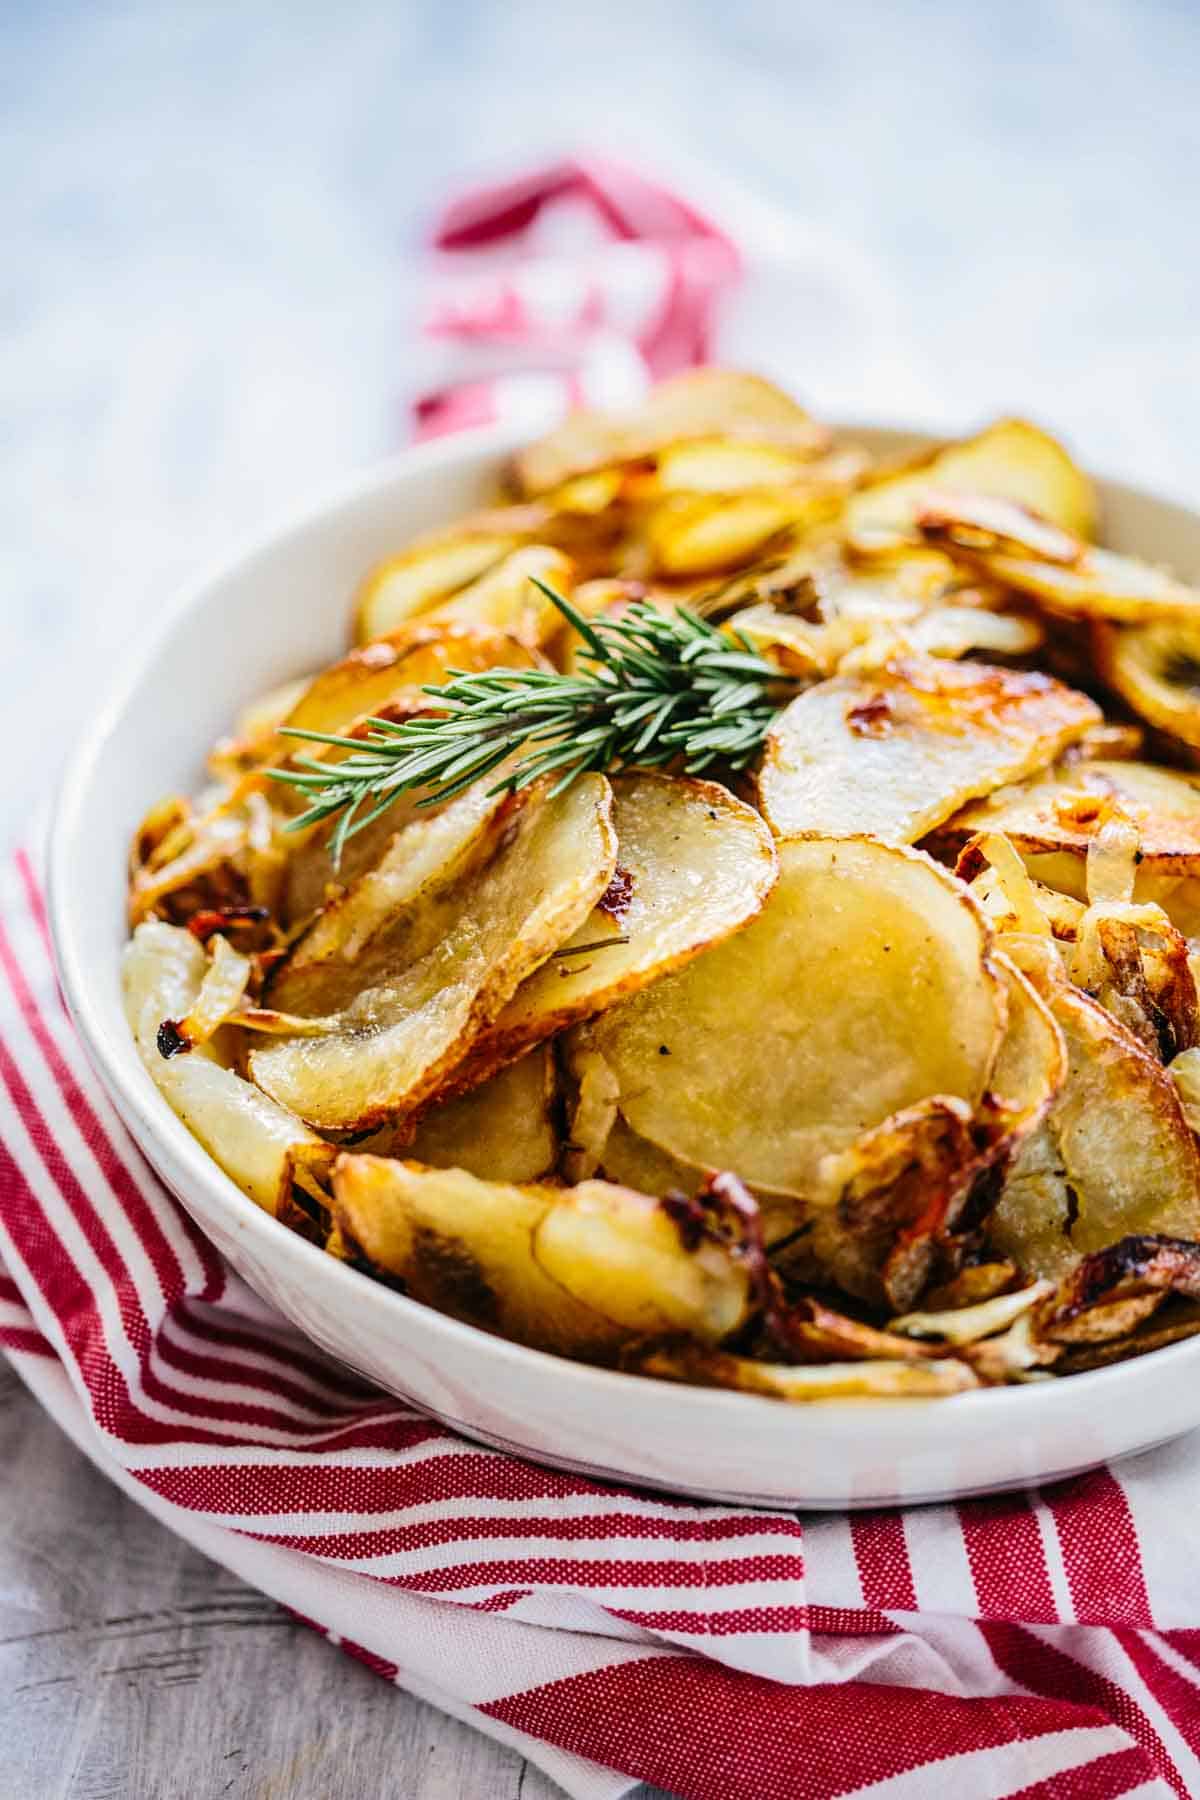 https://coleycooks.com/wp-content/uploads/2023/02/crispy-roasted-potatoes-and-onions-8.jpg